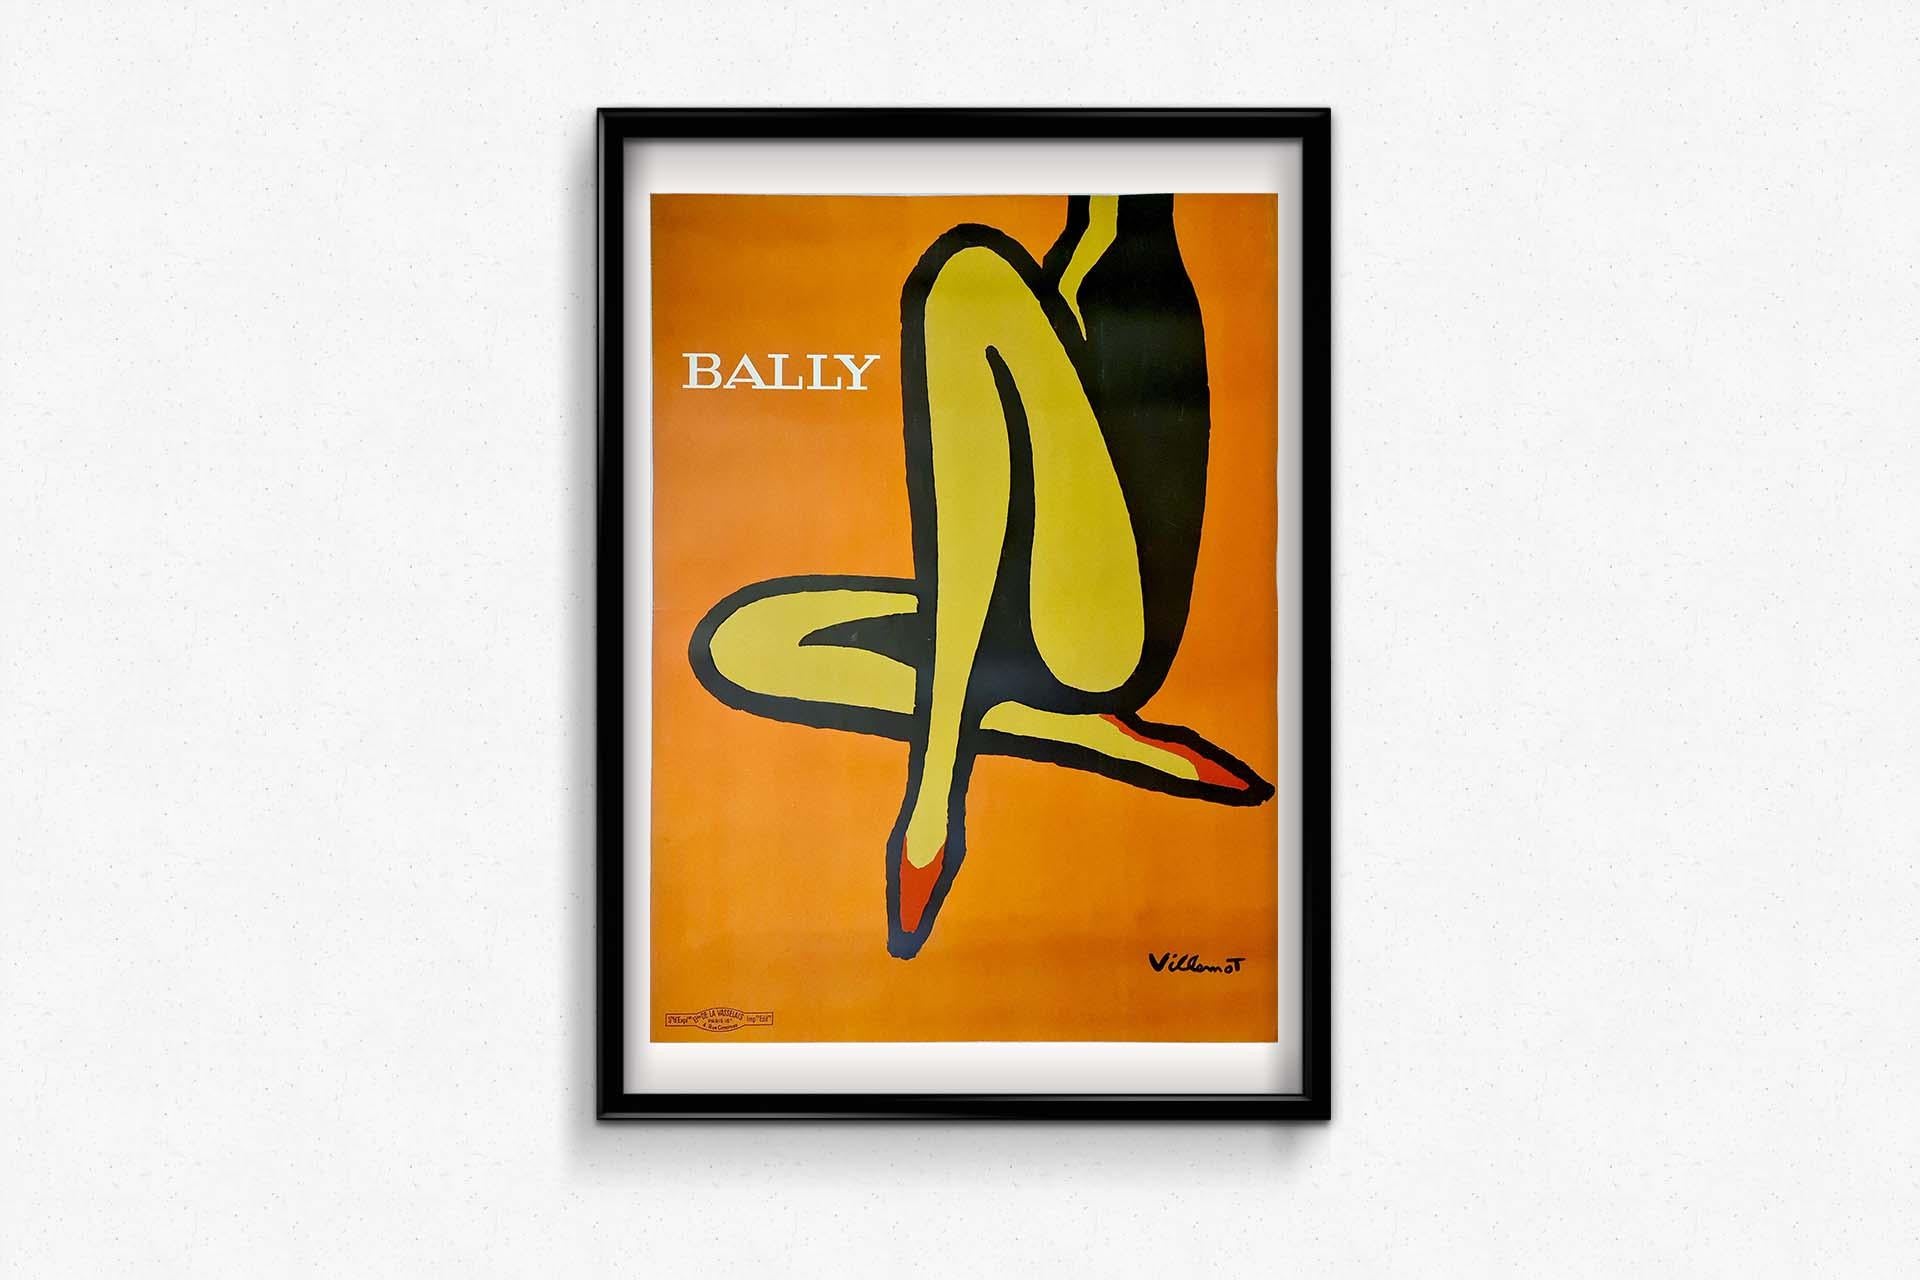 1964 Original Poster by Villemot Bally - Les jambes - French Fashion 2